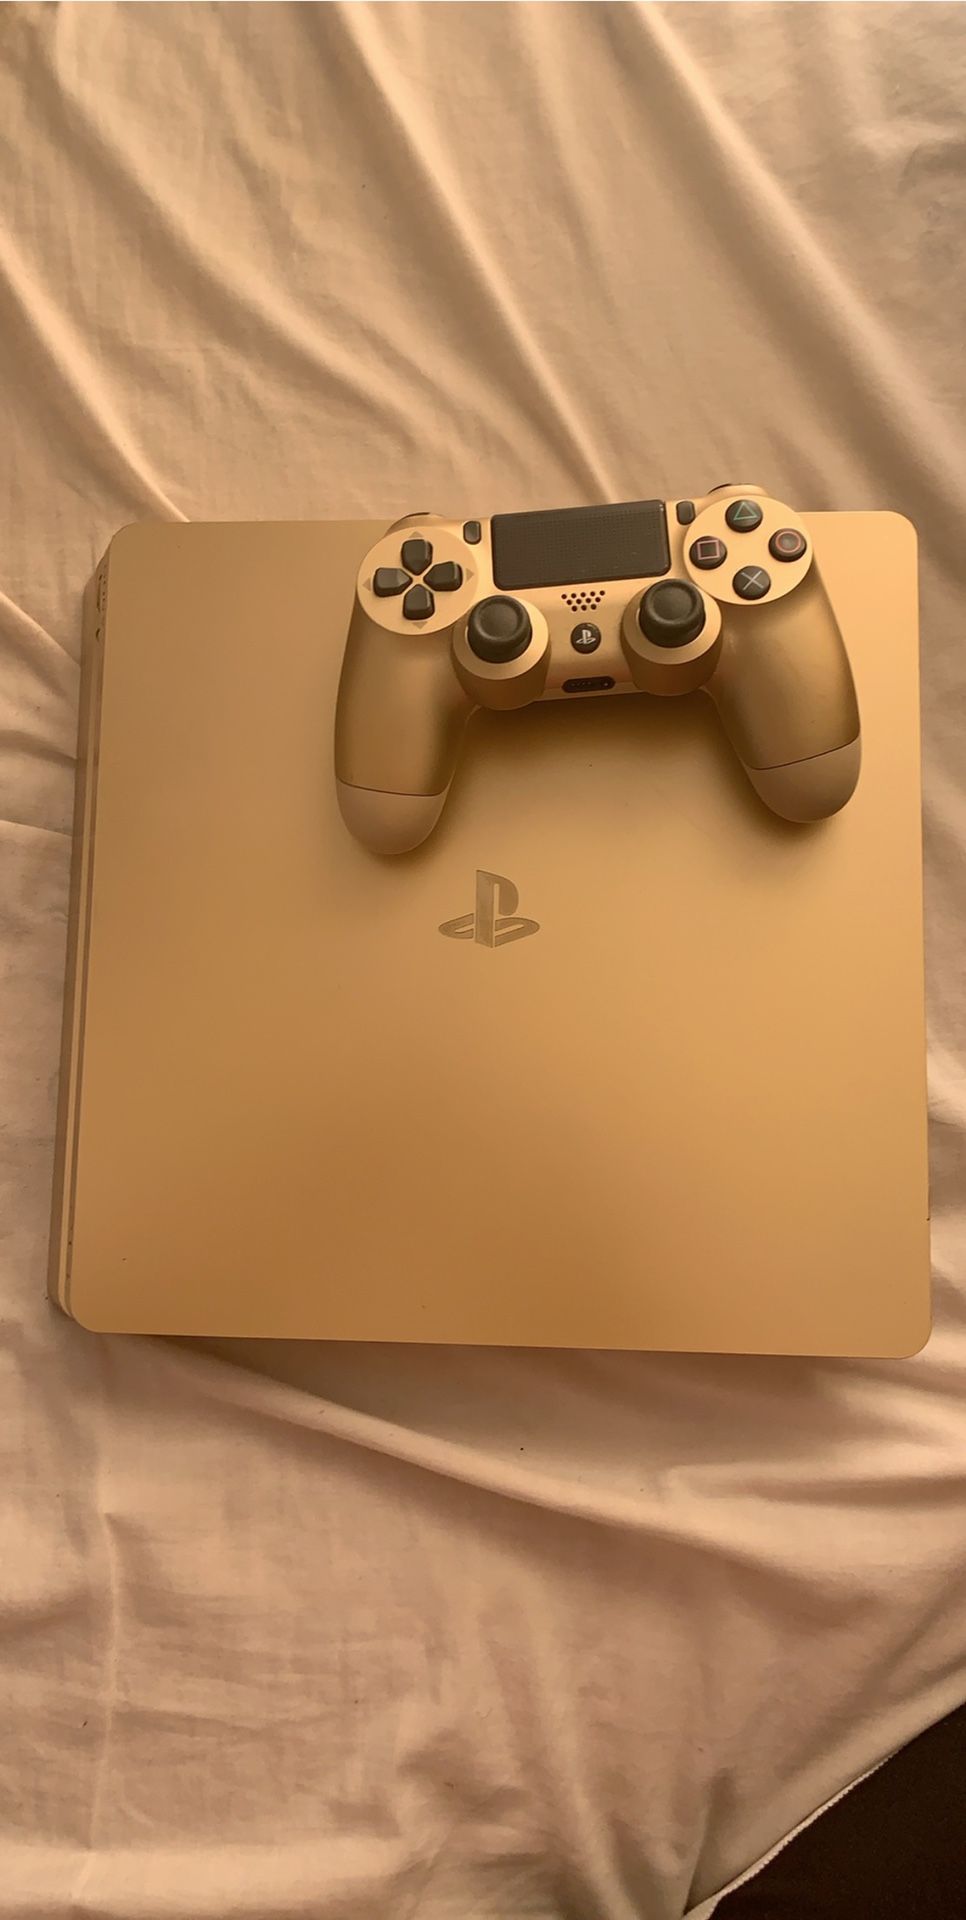 1TB Gold Playstation 4